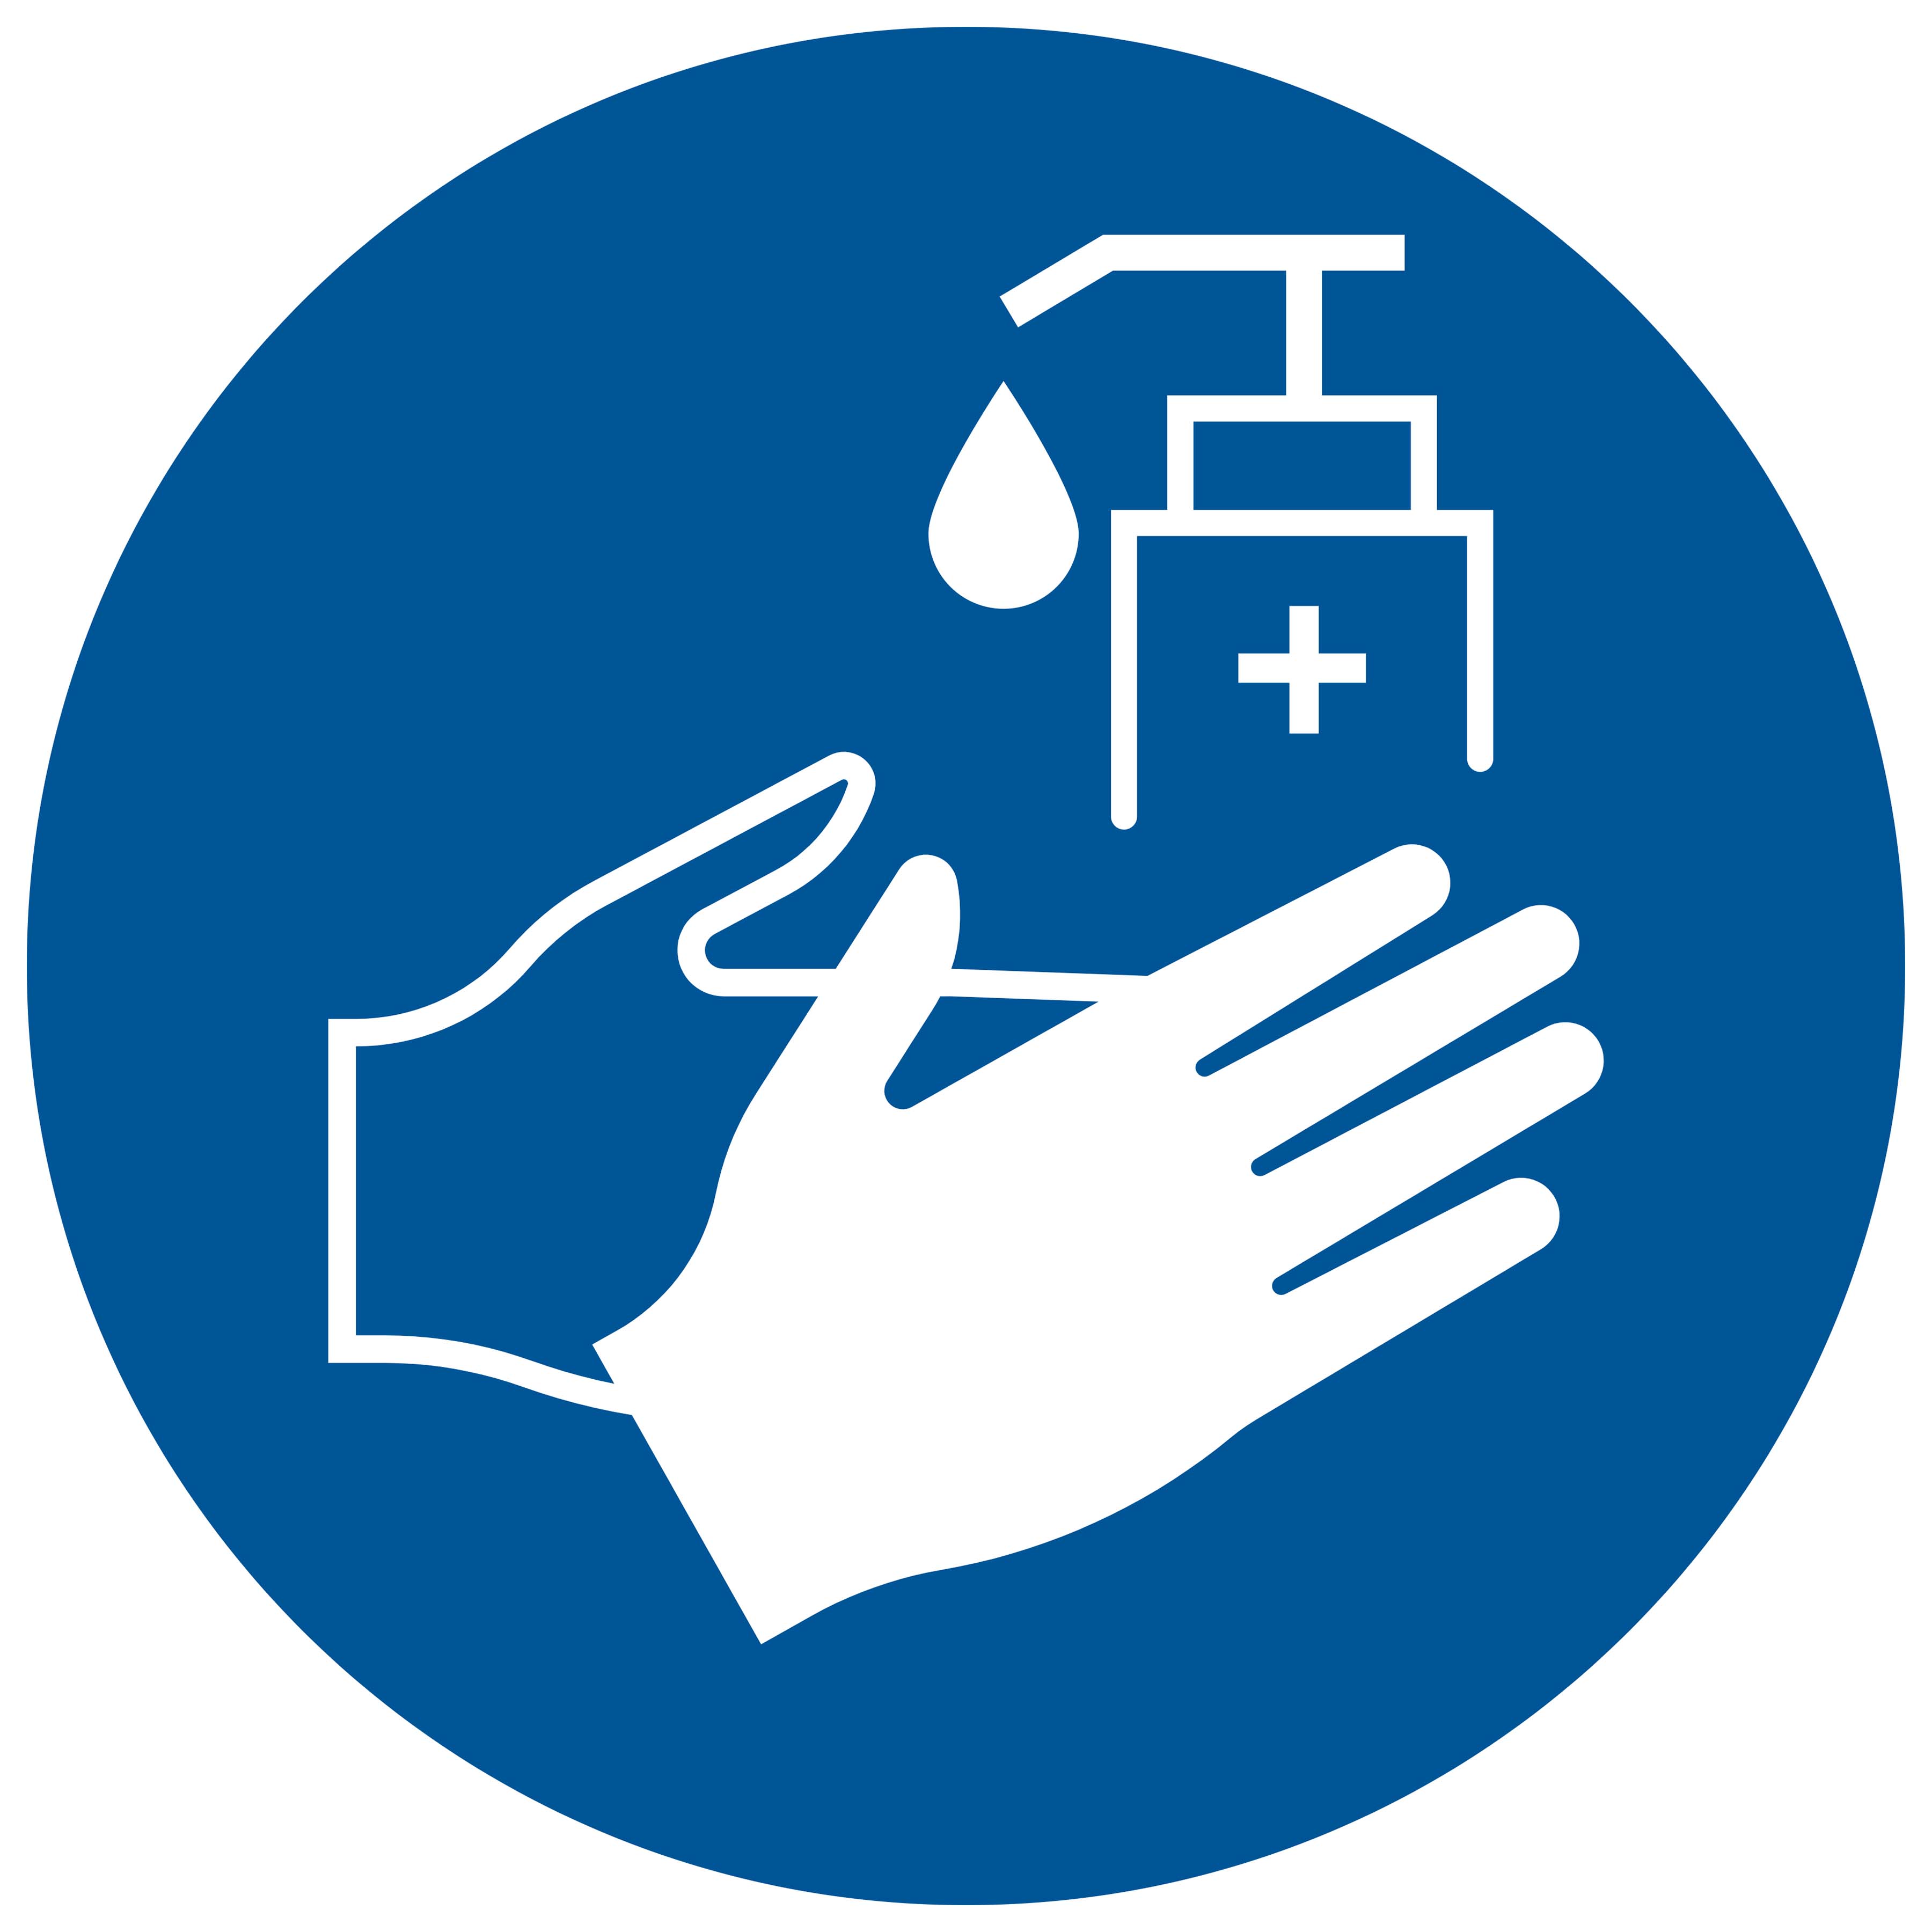 Pickup bord Handen desinfecteren verplicht - Disinfect hands required -Désinfection des mains requise - Hände desinfizieren erforderlich- social distance  